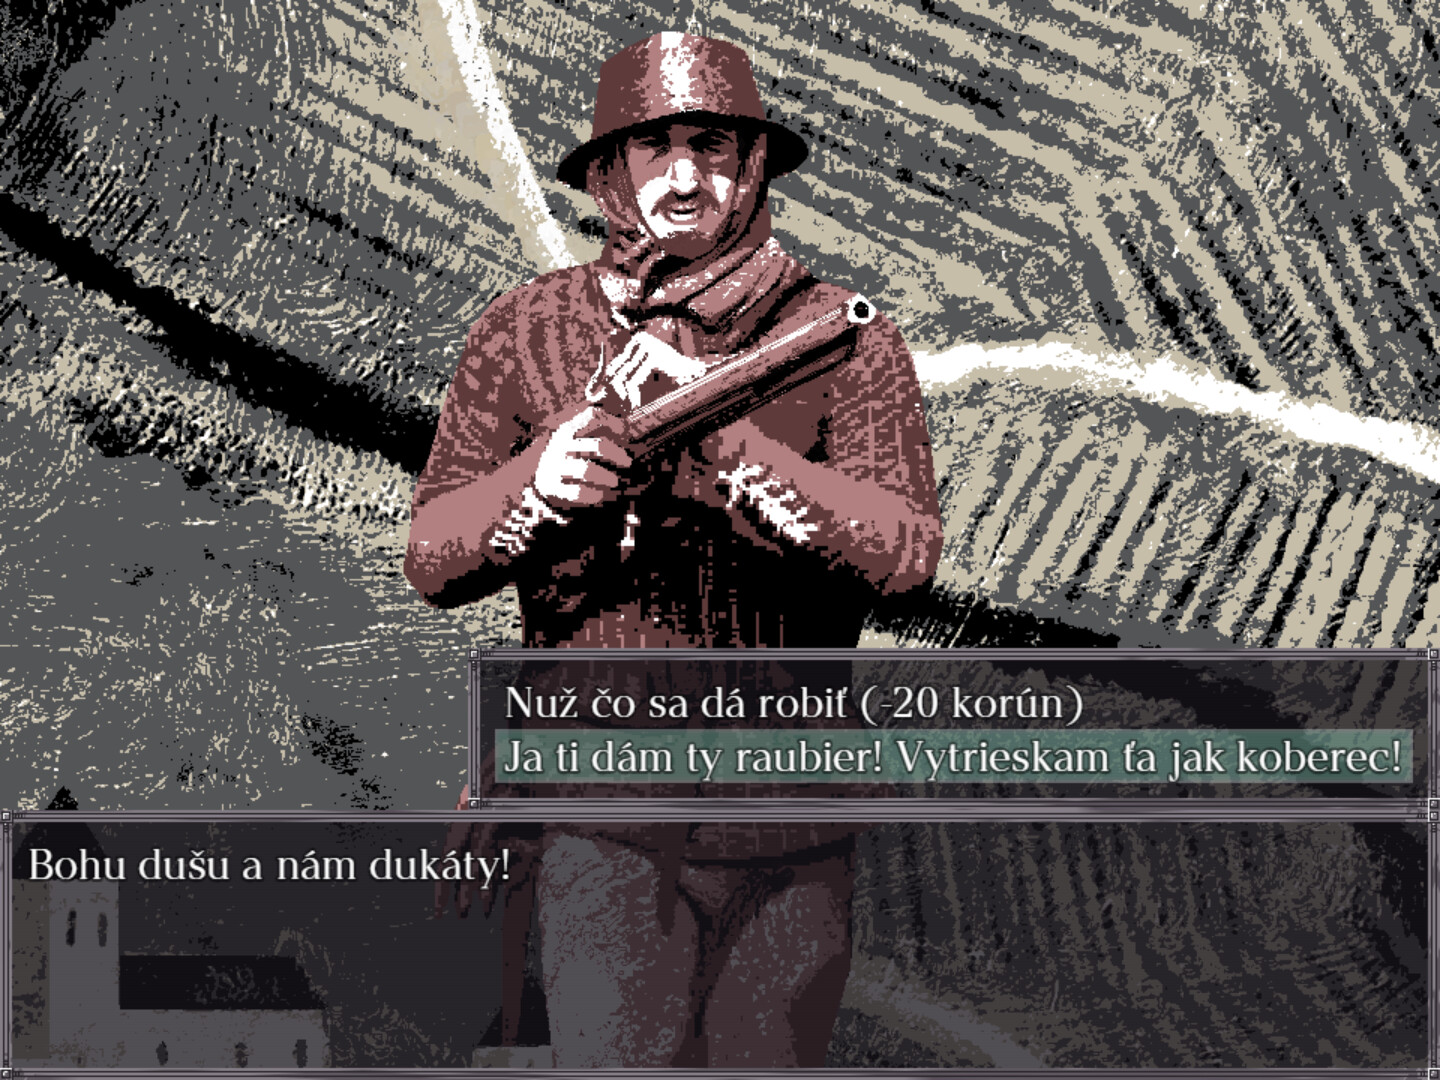 Felvidek dialogue screen of bandit random encounter over a field of wheat